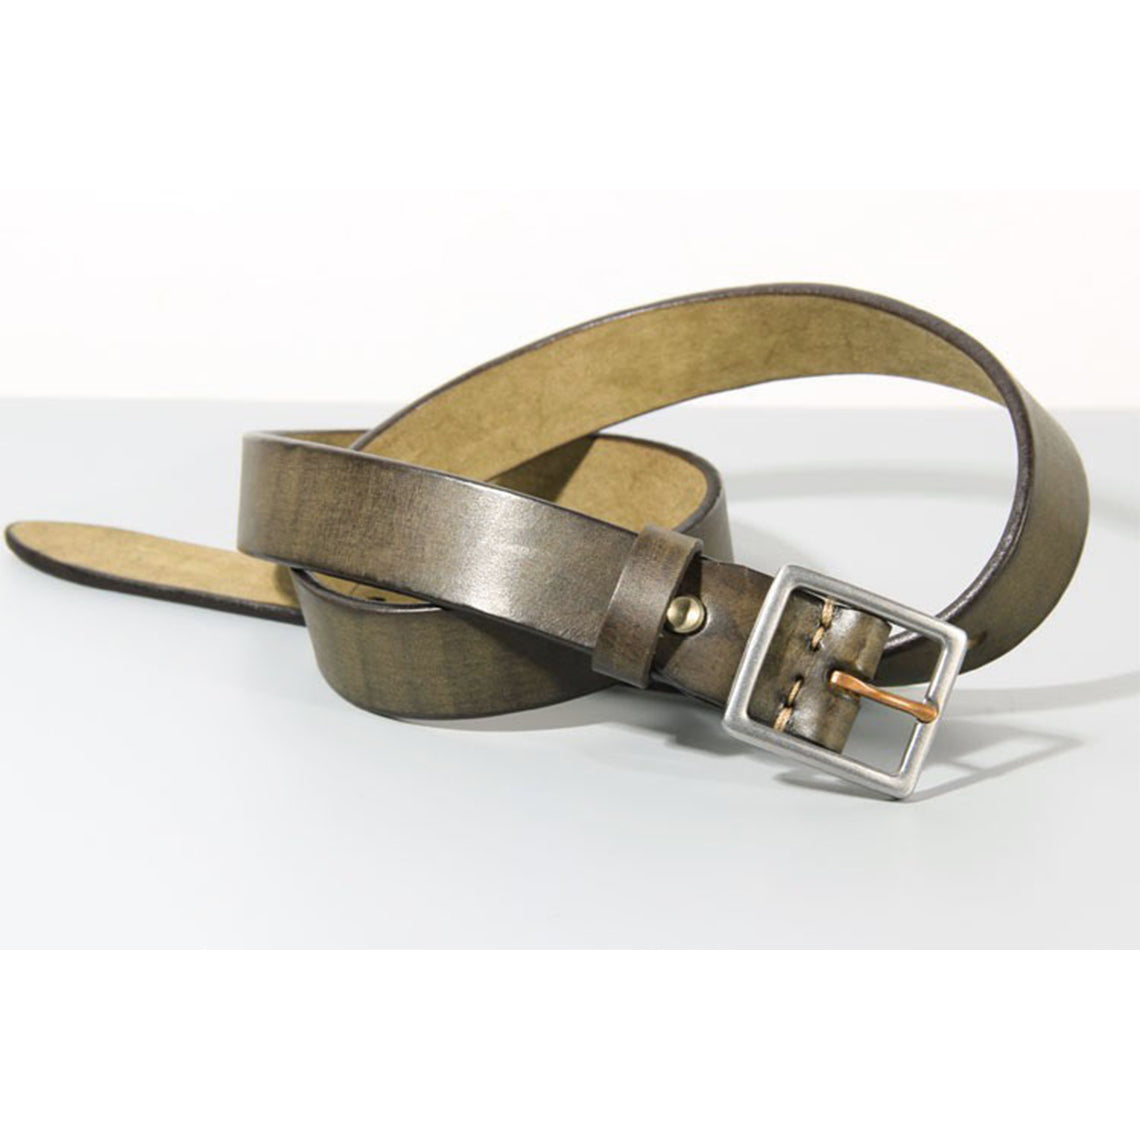 POPSEWING® Full Grain Leather Versatile Women Belt